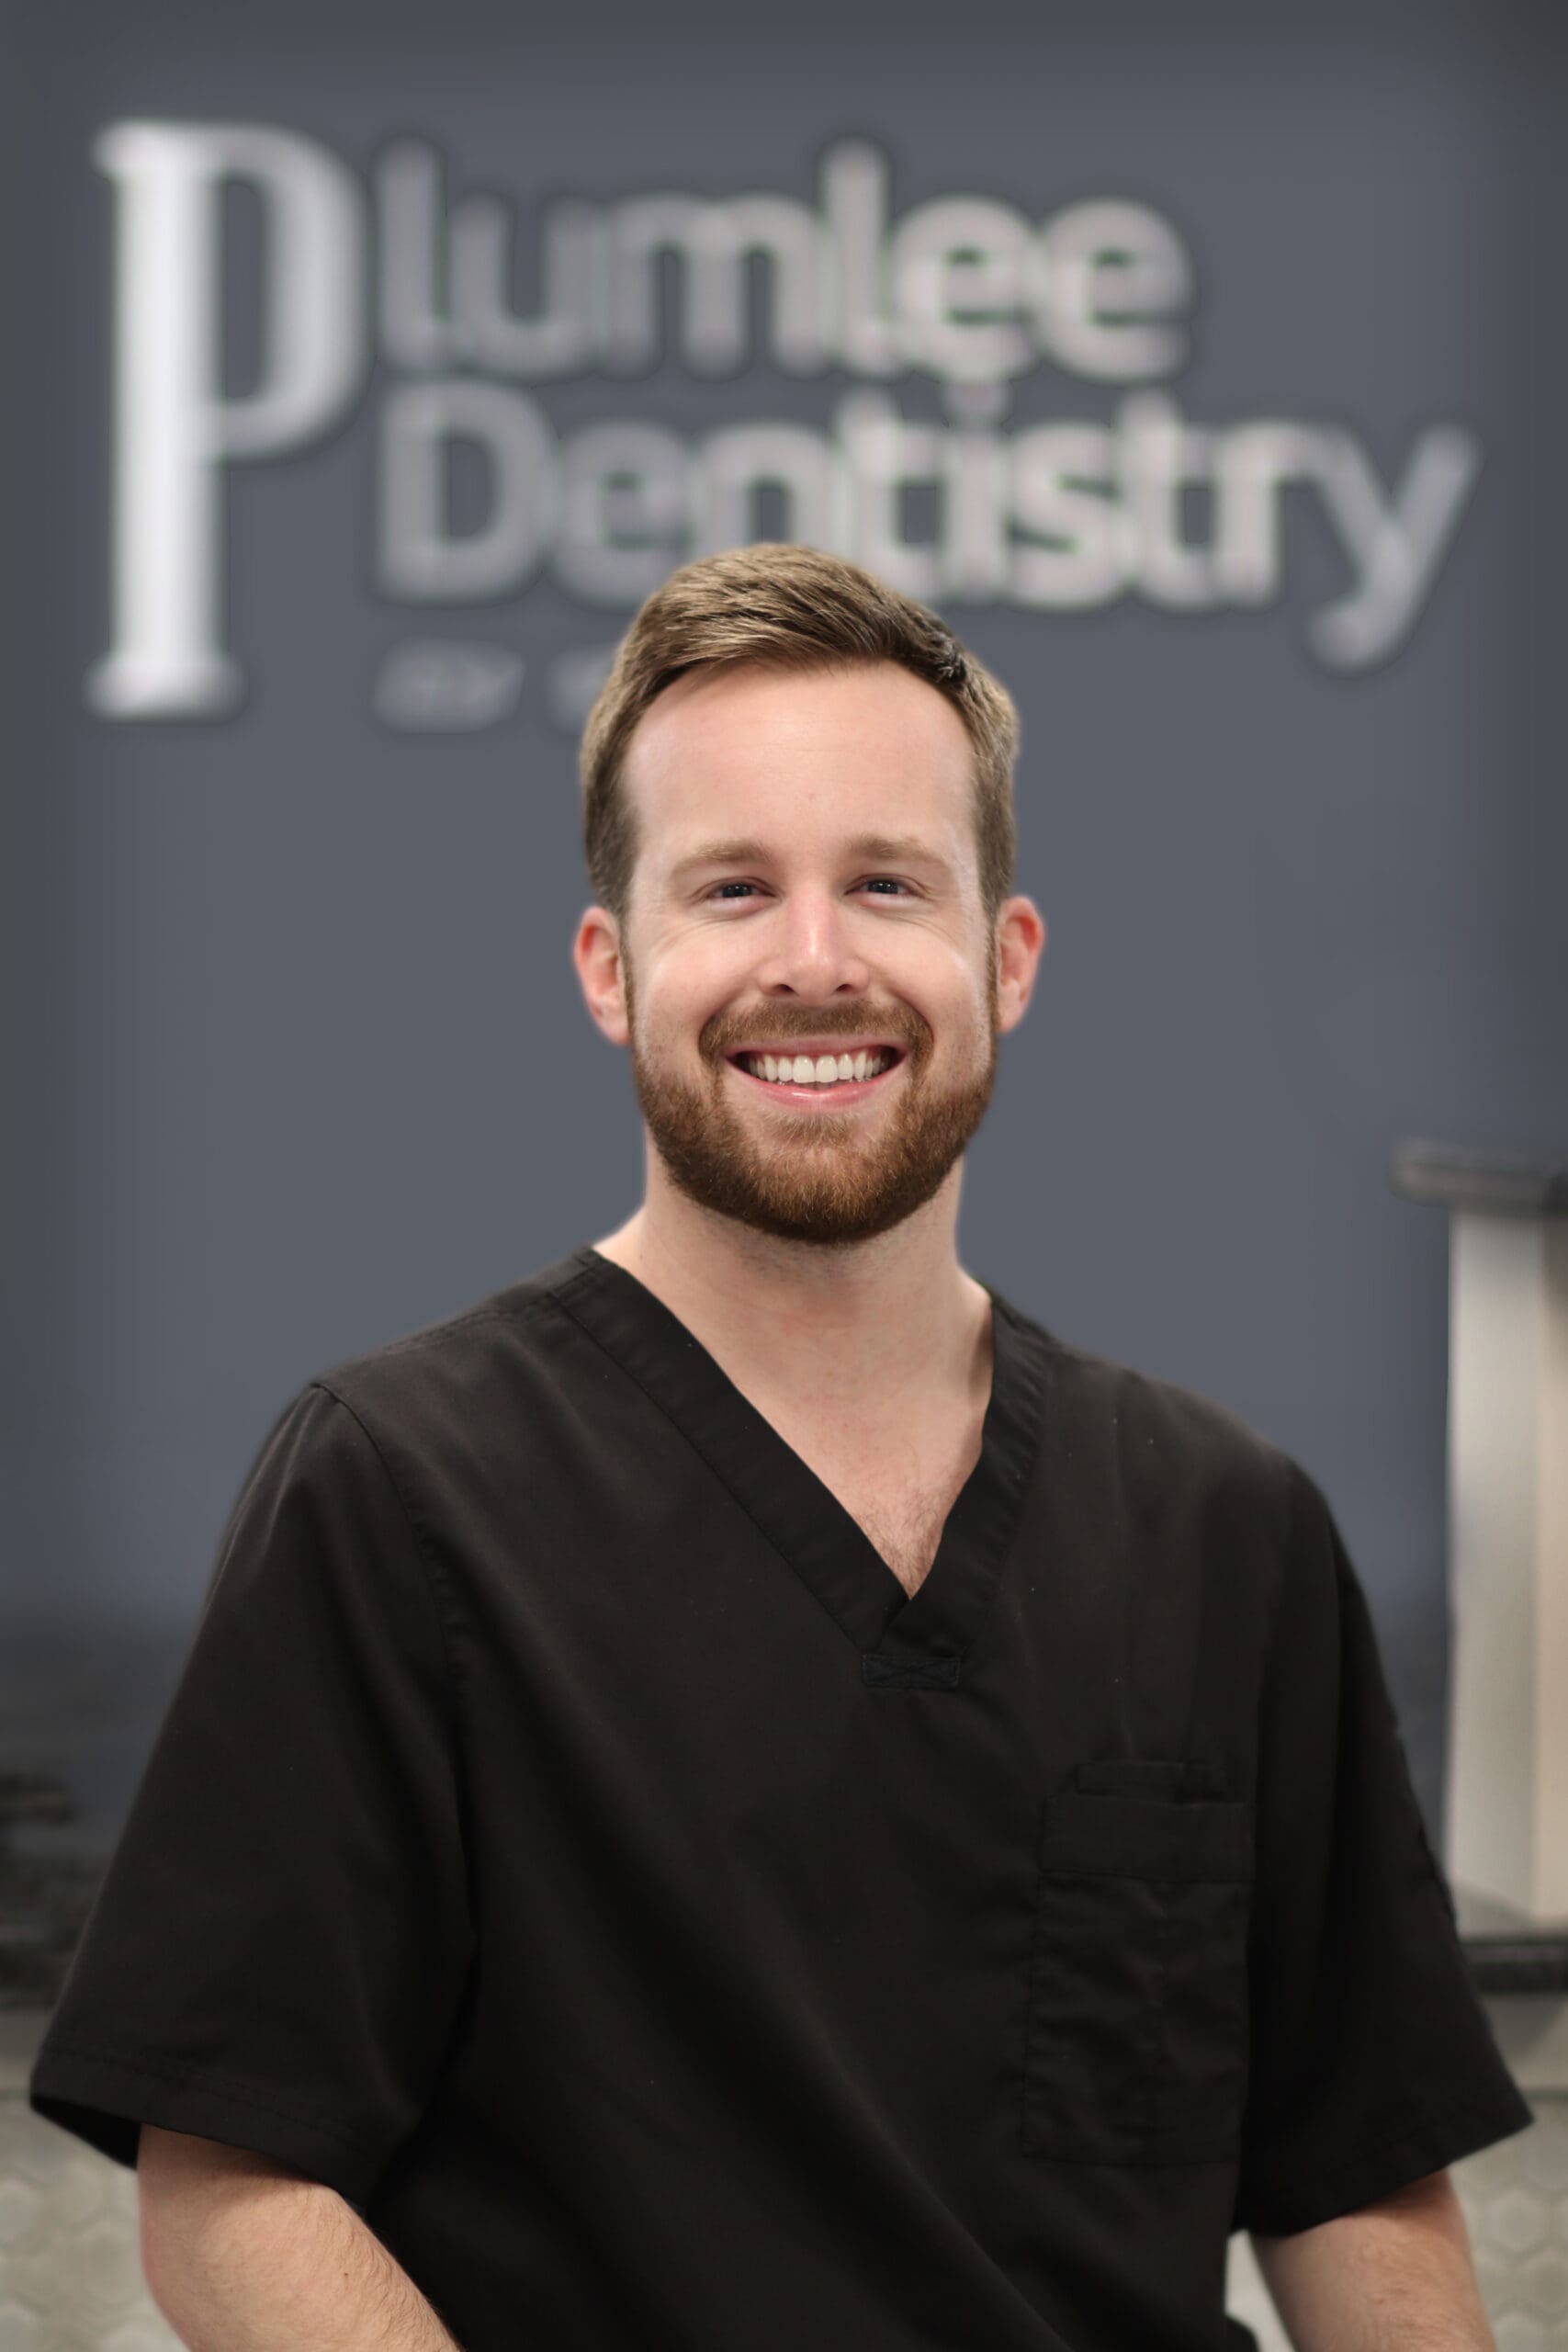 Kurt Corsbie, DDS, Dentist at Plumlee Dentistry